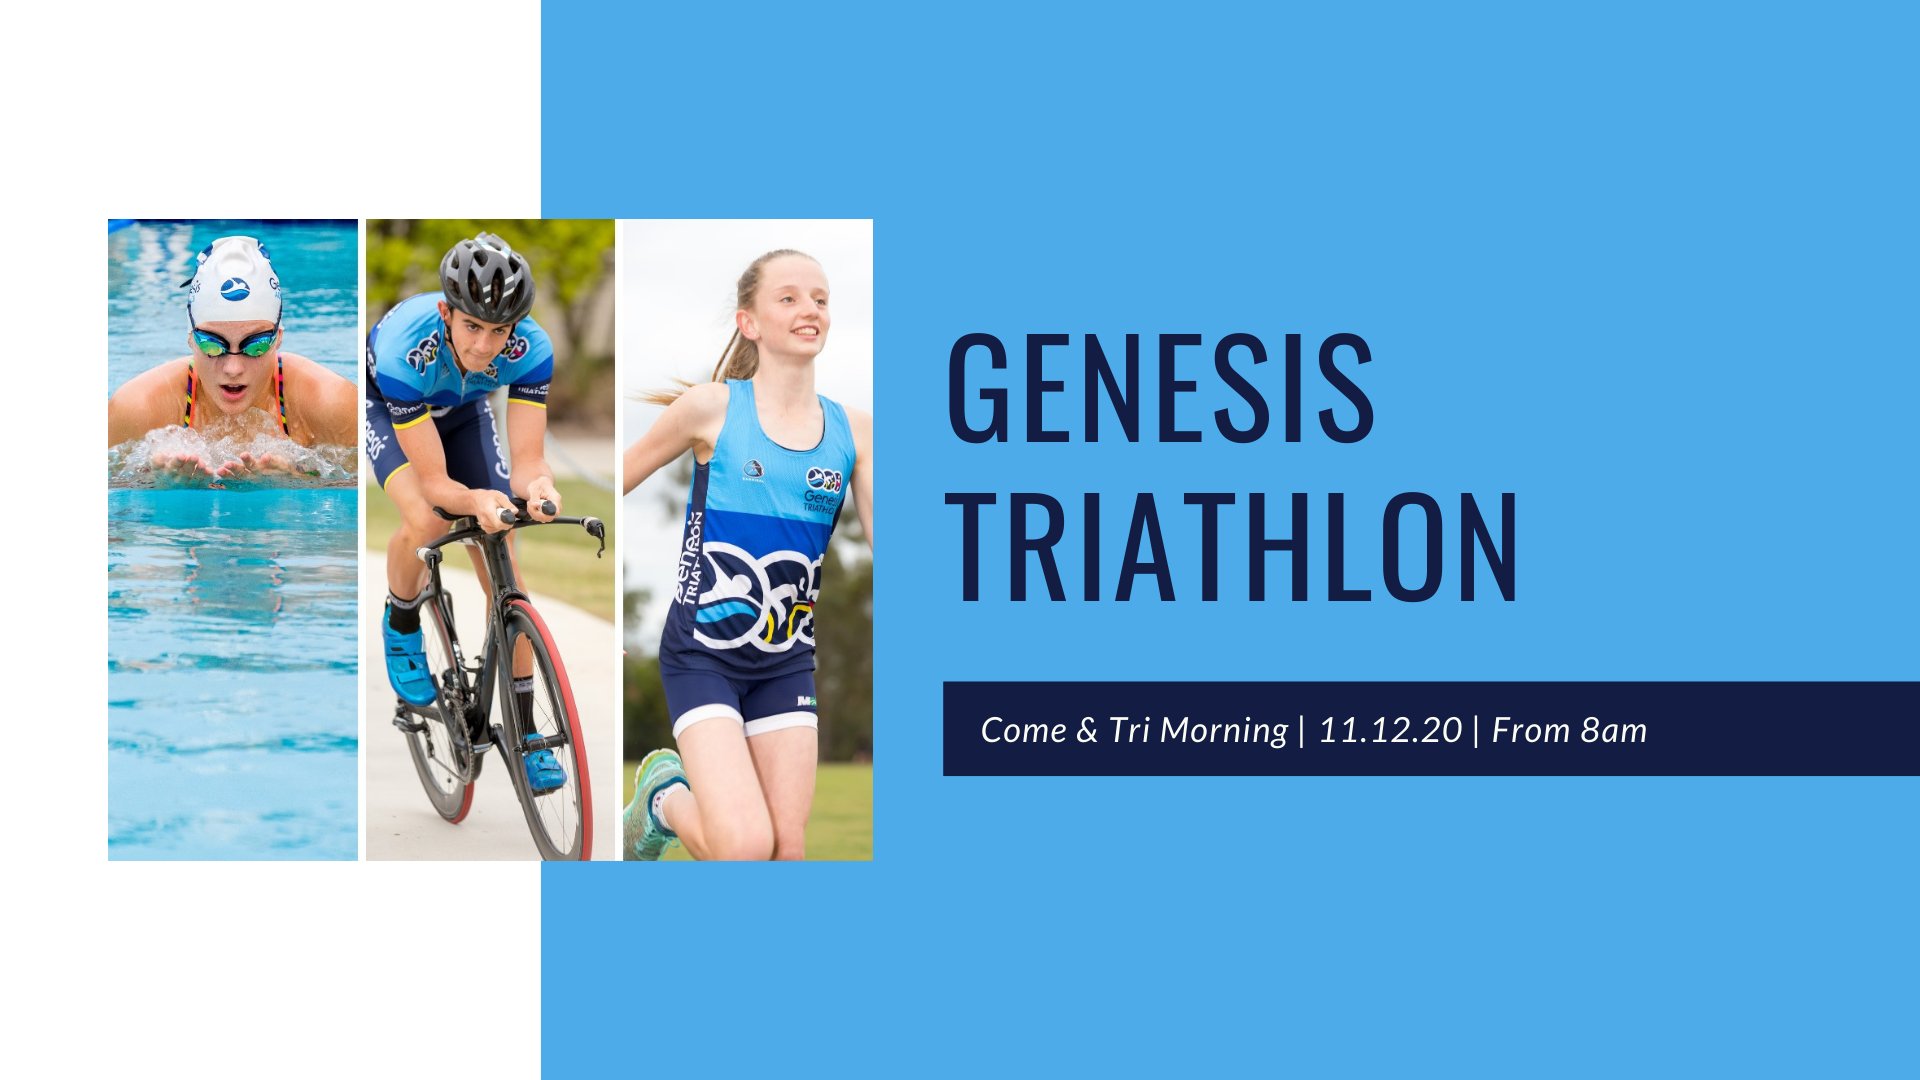 Genesis Triathlon